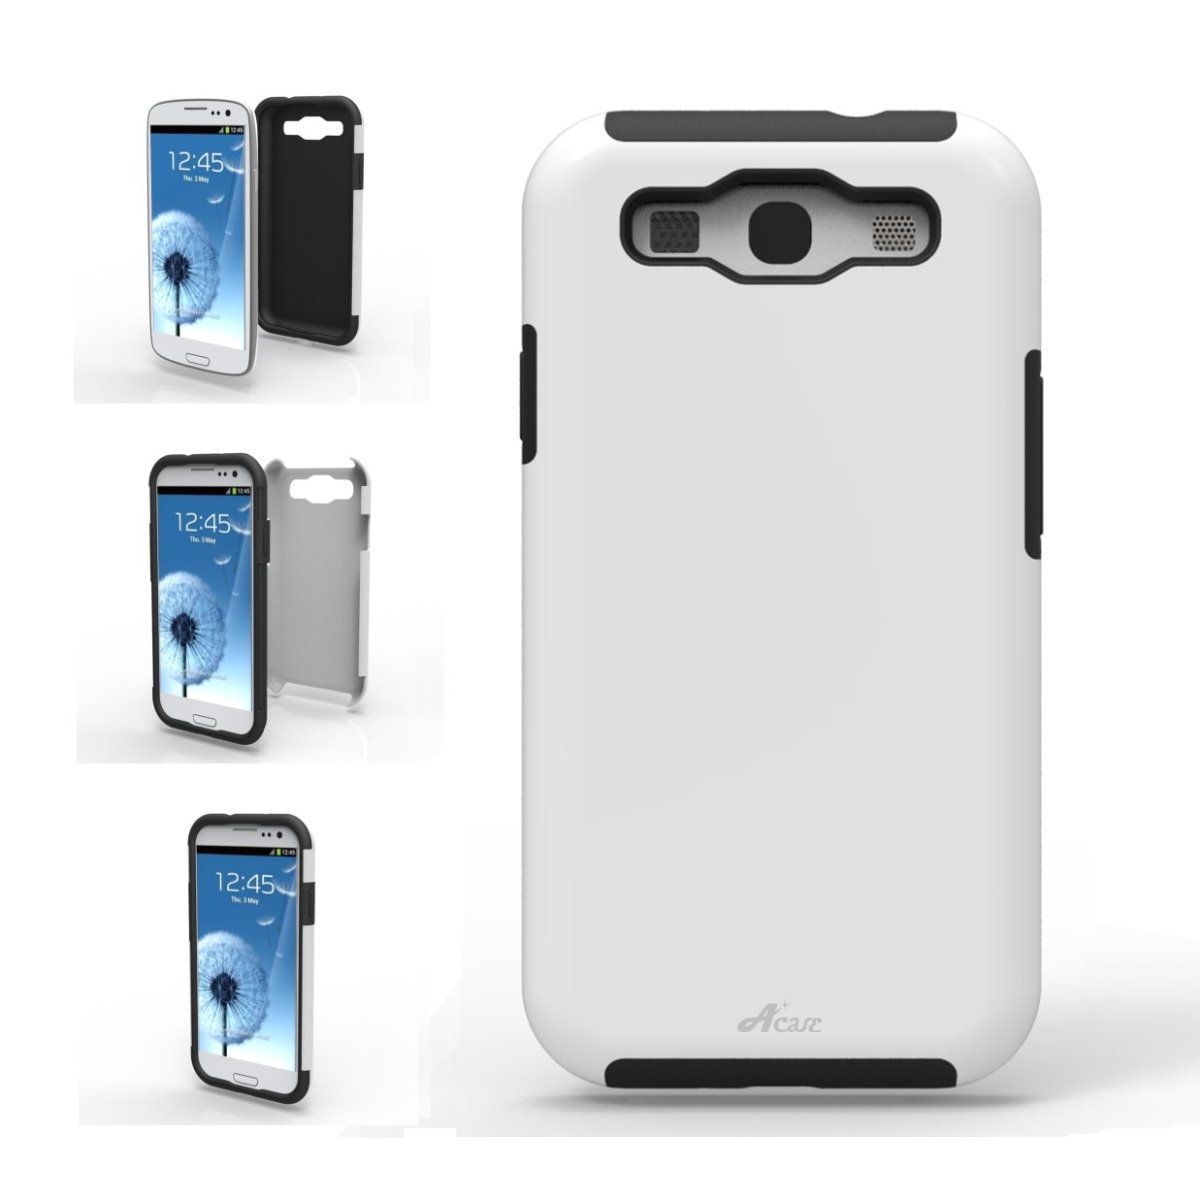 Acase Samsung Galaxy S3 Case   Superleggera PRO Dual Layer Protection